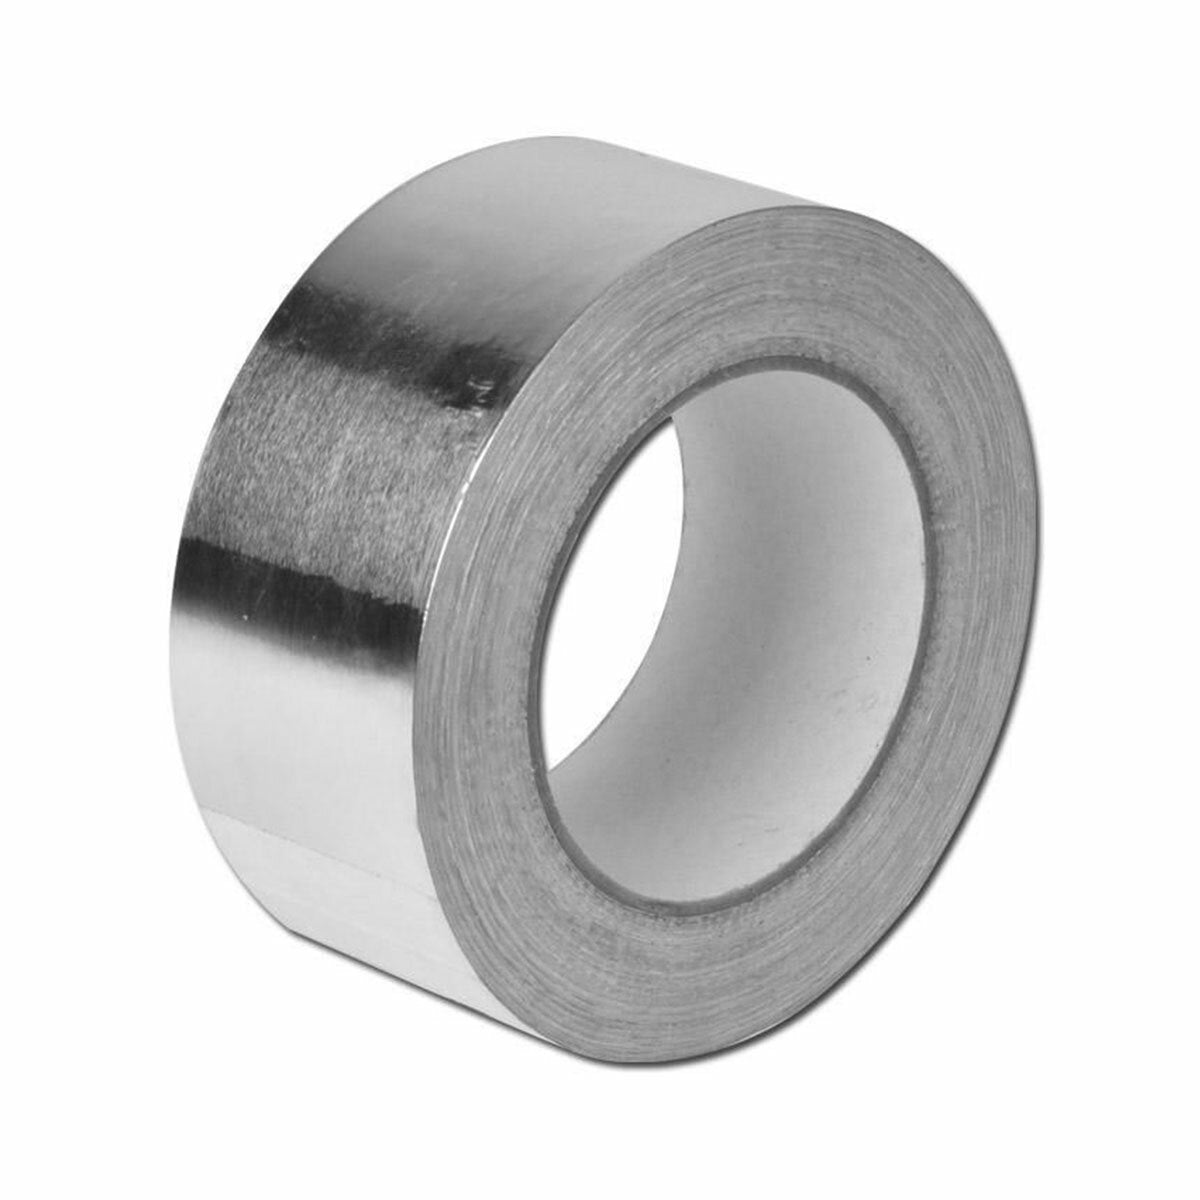 Niccons Aluminum Adhesive Tape